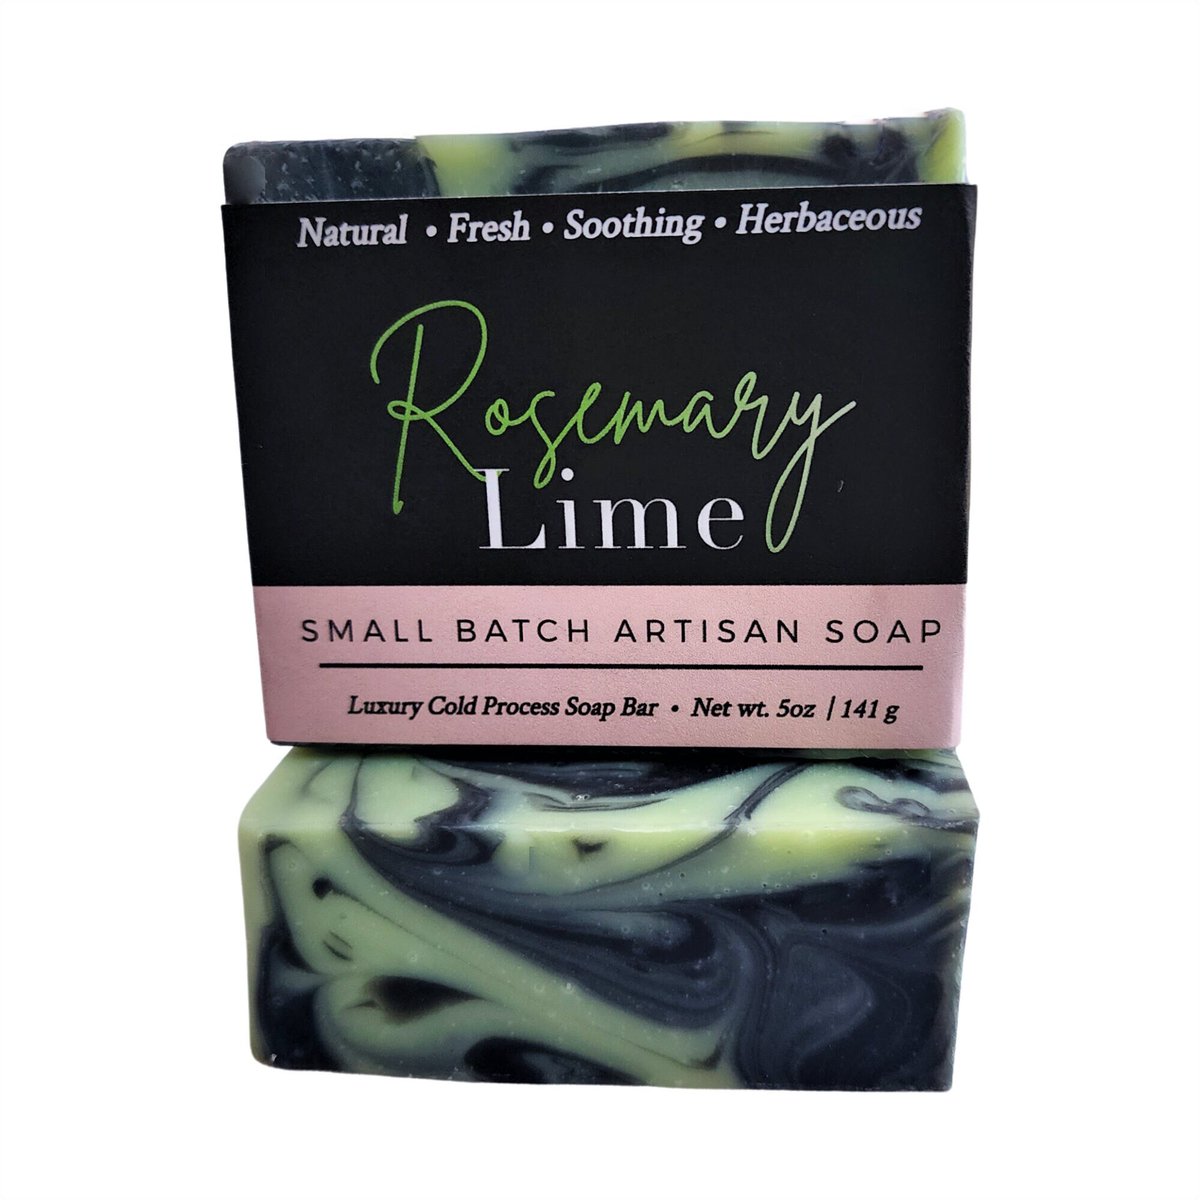 Rosemary Lime Soap, Rosemary Soap, Lime Soap, Natural Soap, Vegan Soap, Cold Process Soap, Artisan Soap, Soap Gift, , Valentine's Day Gift tuppu.net/ba08cb34  #ColdProcessSoap